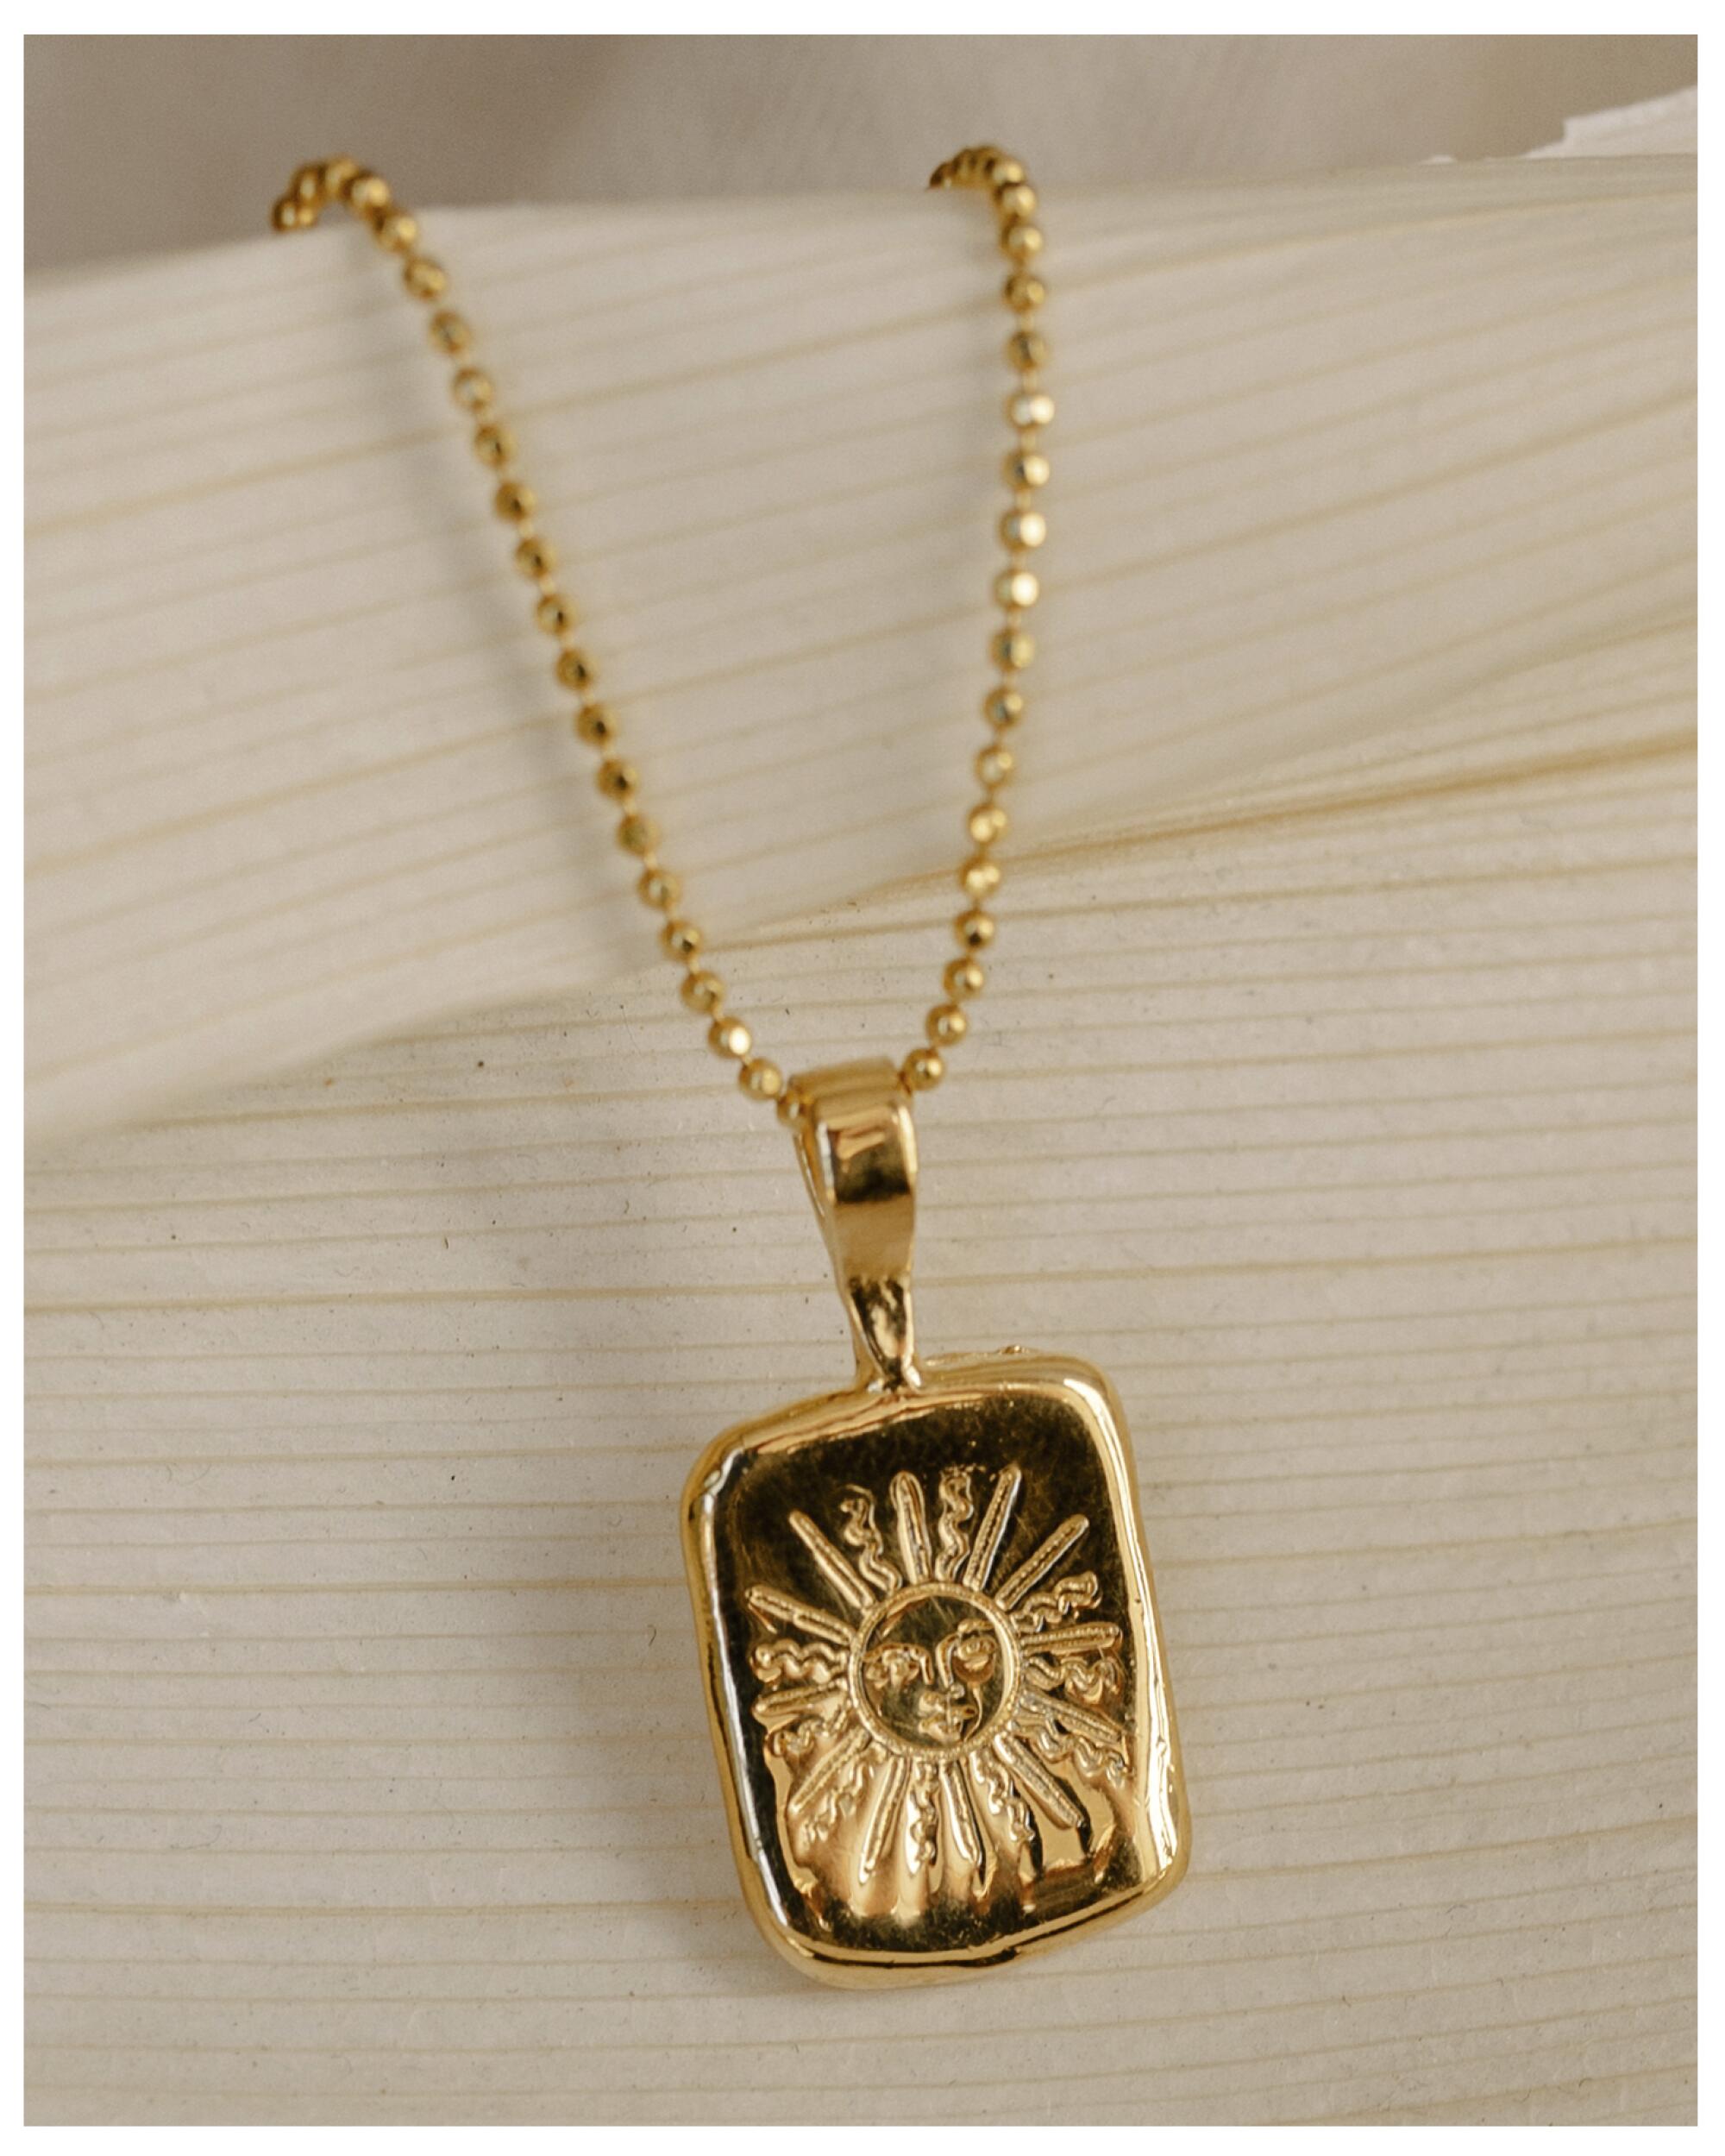 The Sun tarot necklace from Dea Dia